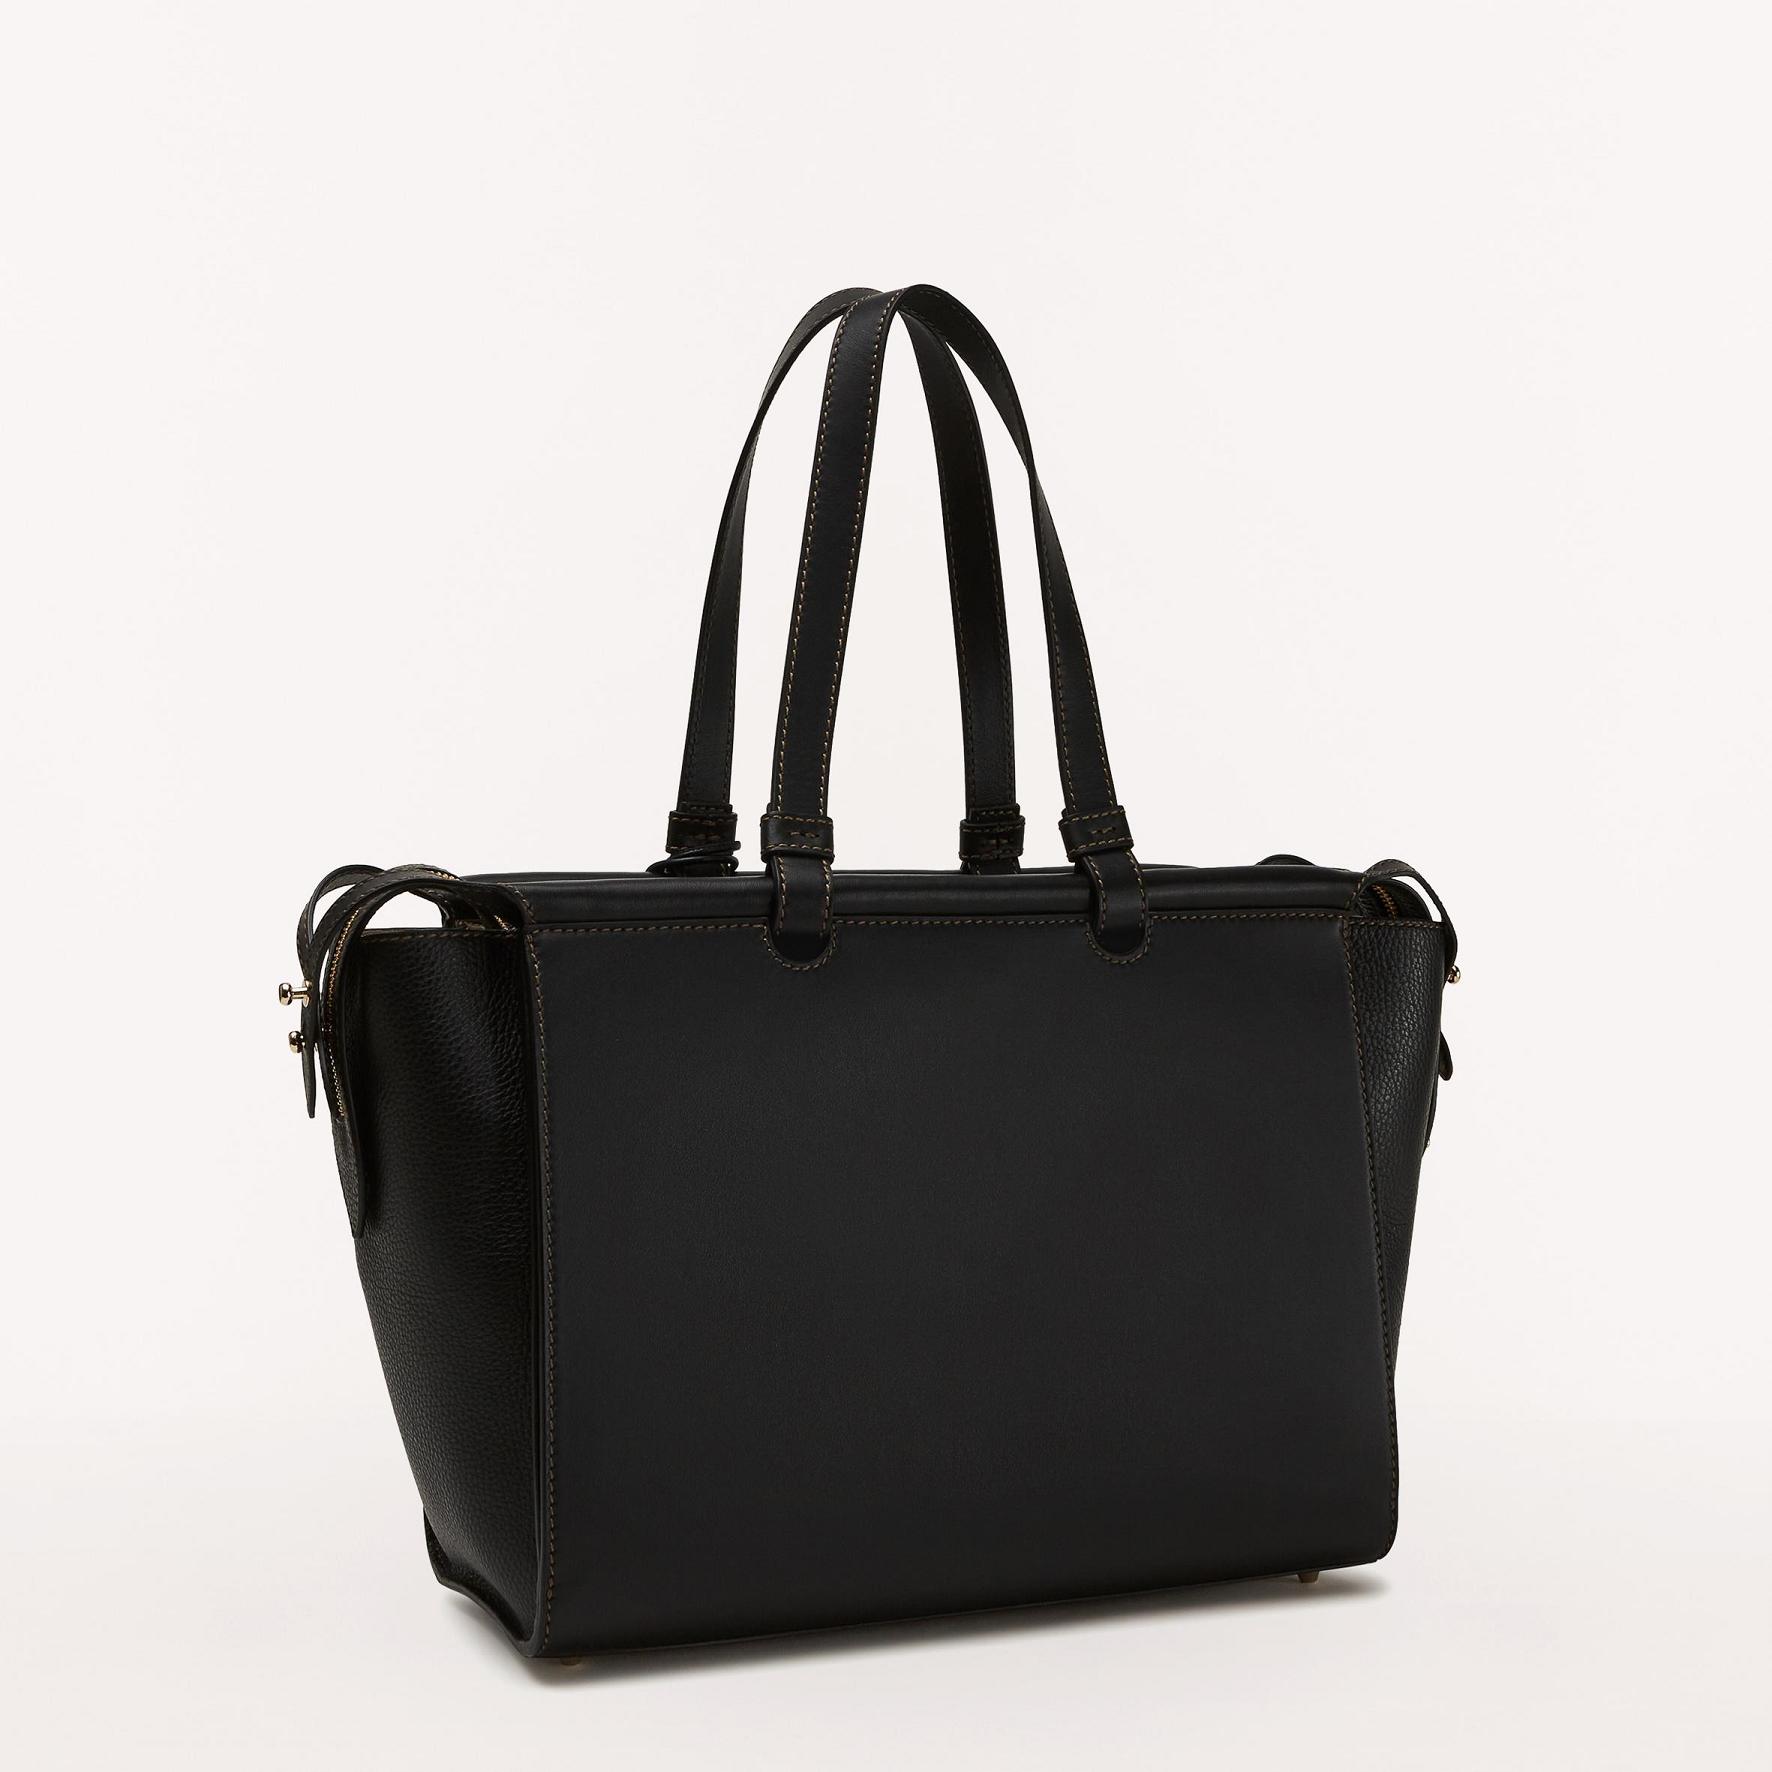 Discount Furla Handbags - Archive Series 01 Bags Black Women